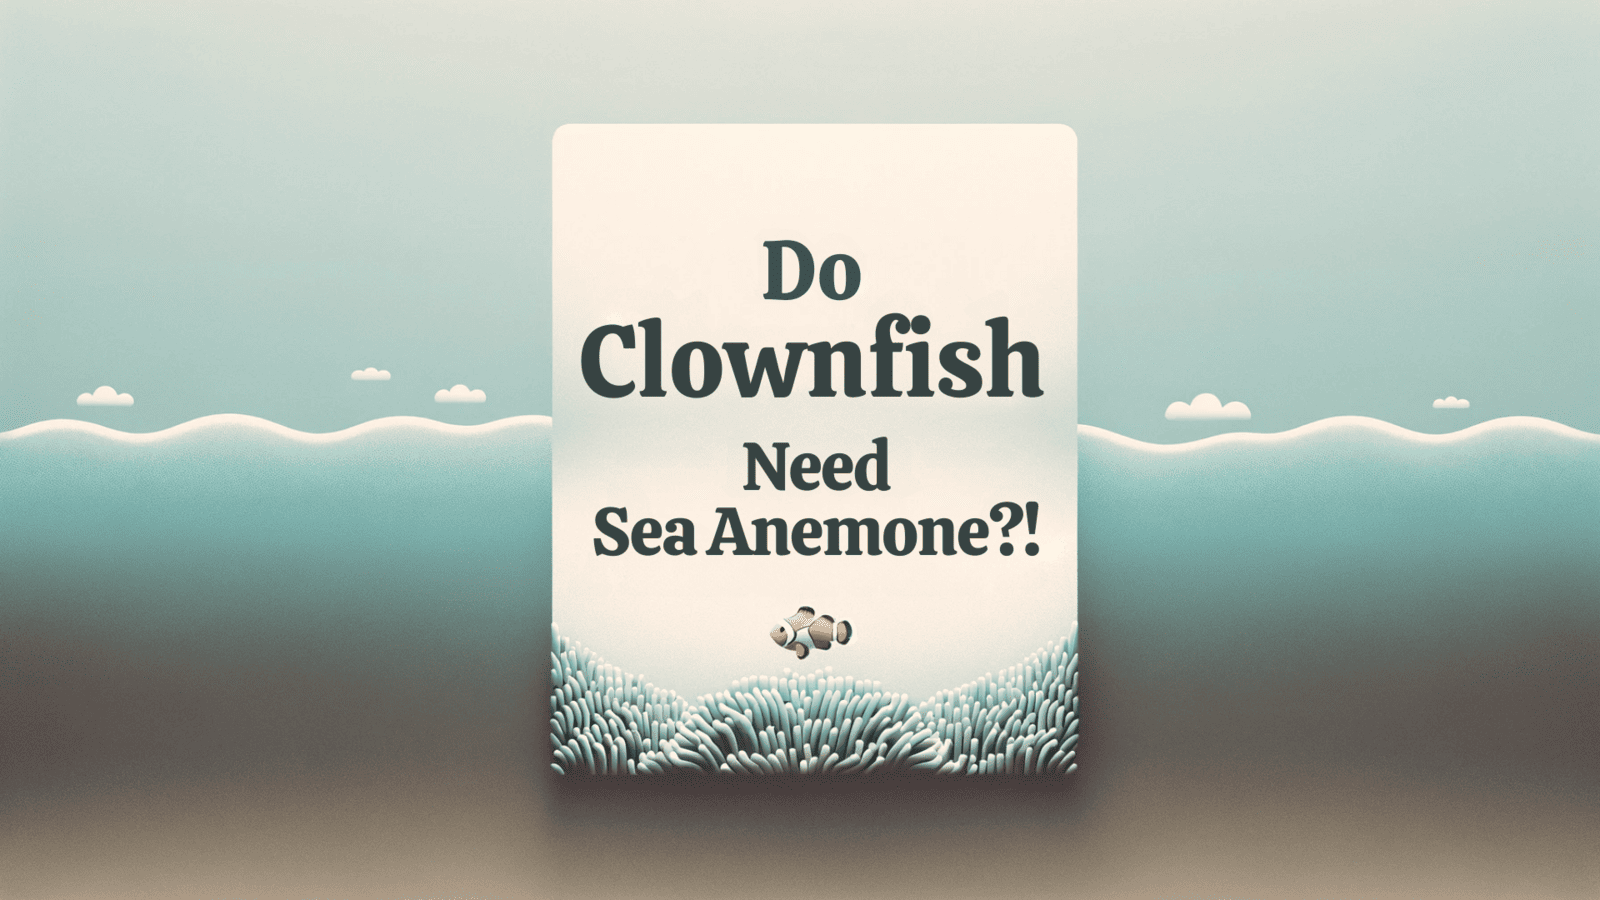 Do Clown fish Need Sea Anemone?